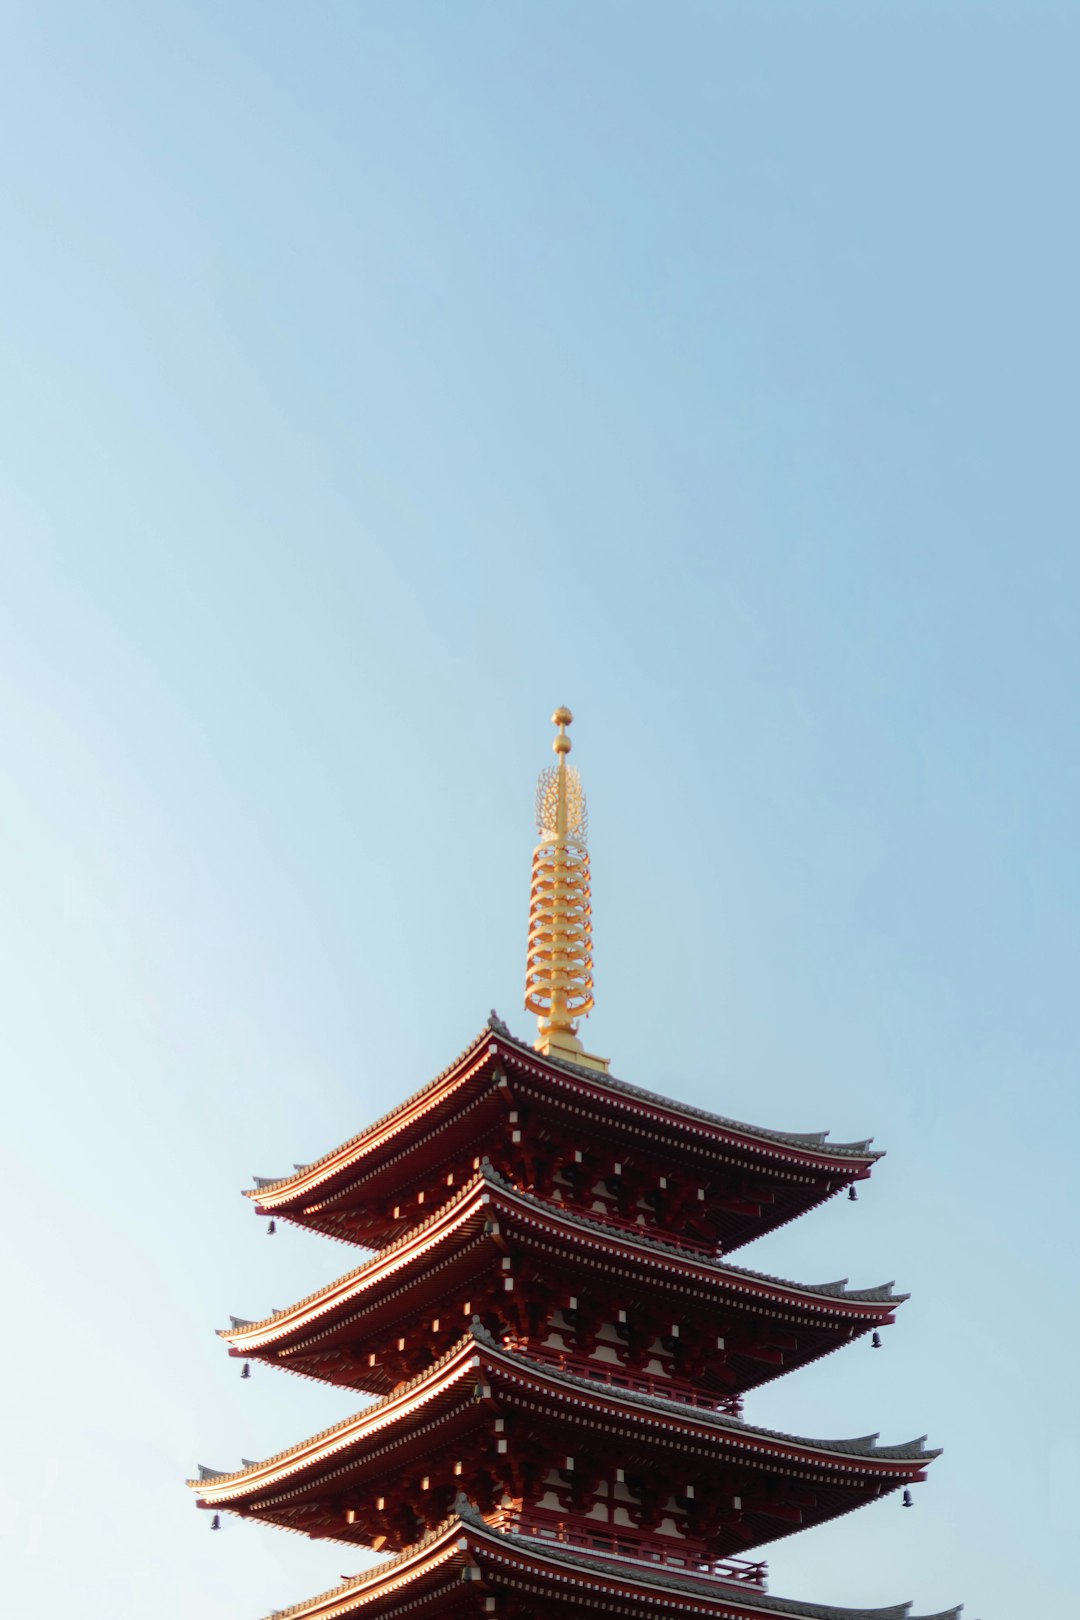 Travel Tips and Stories of Sensō-ji in Japan